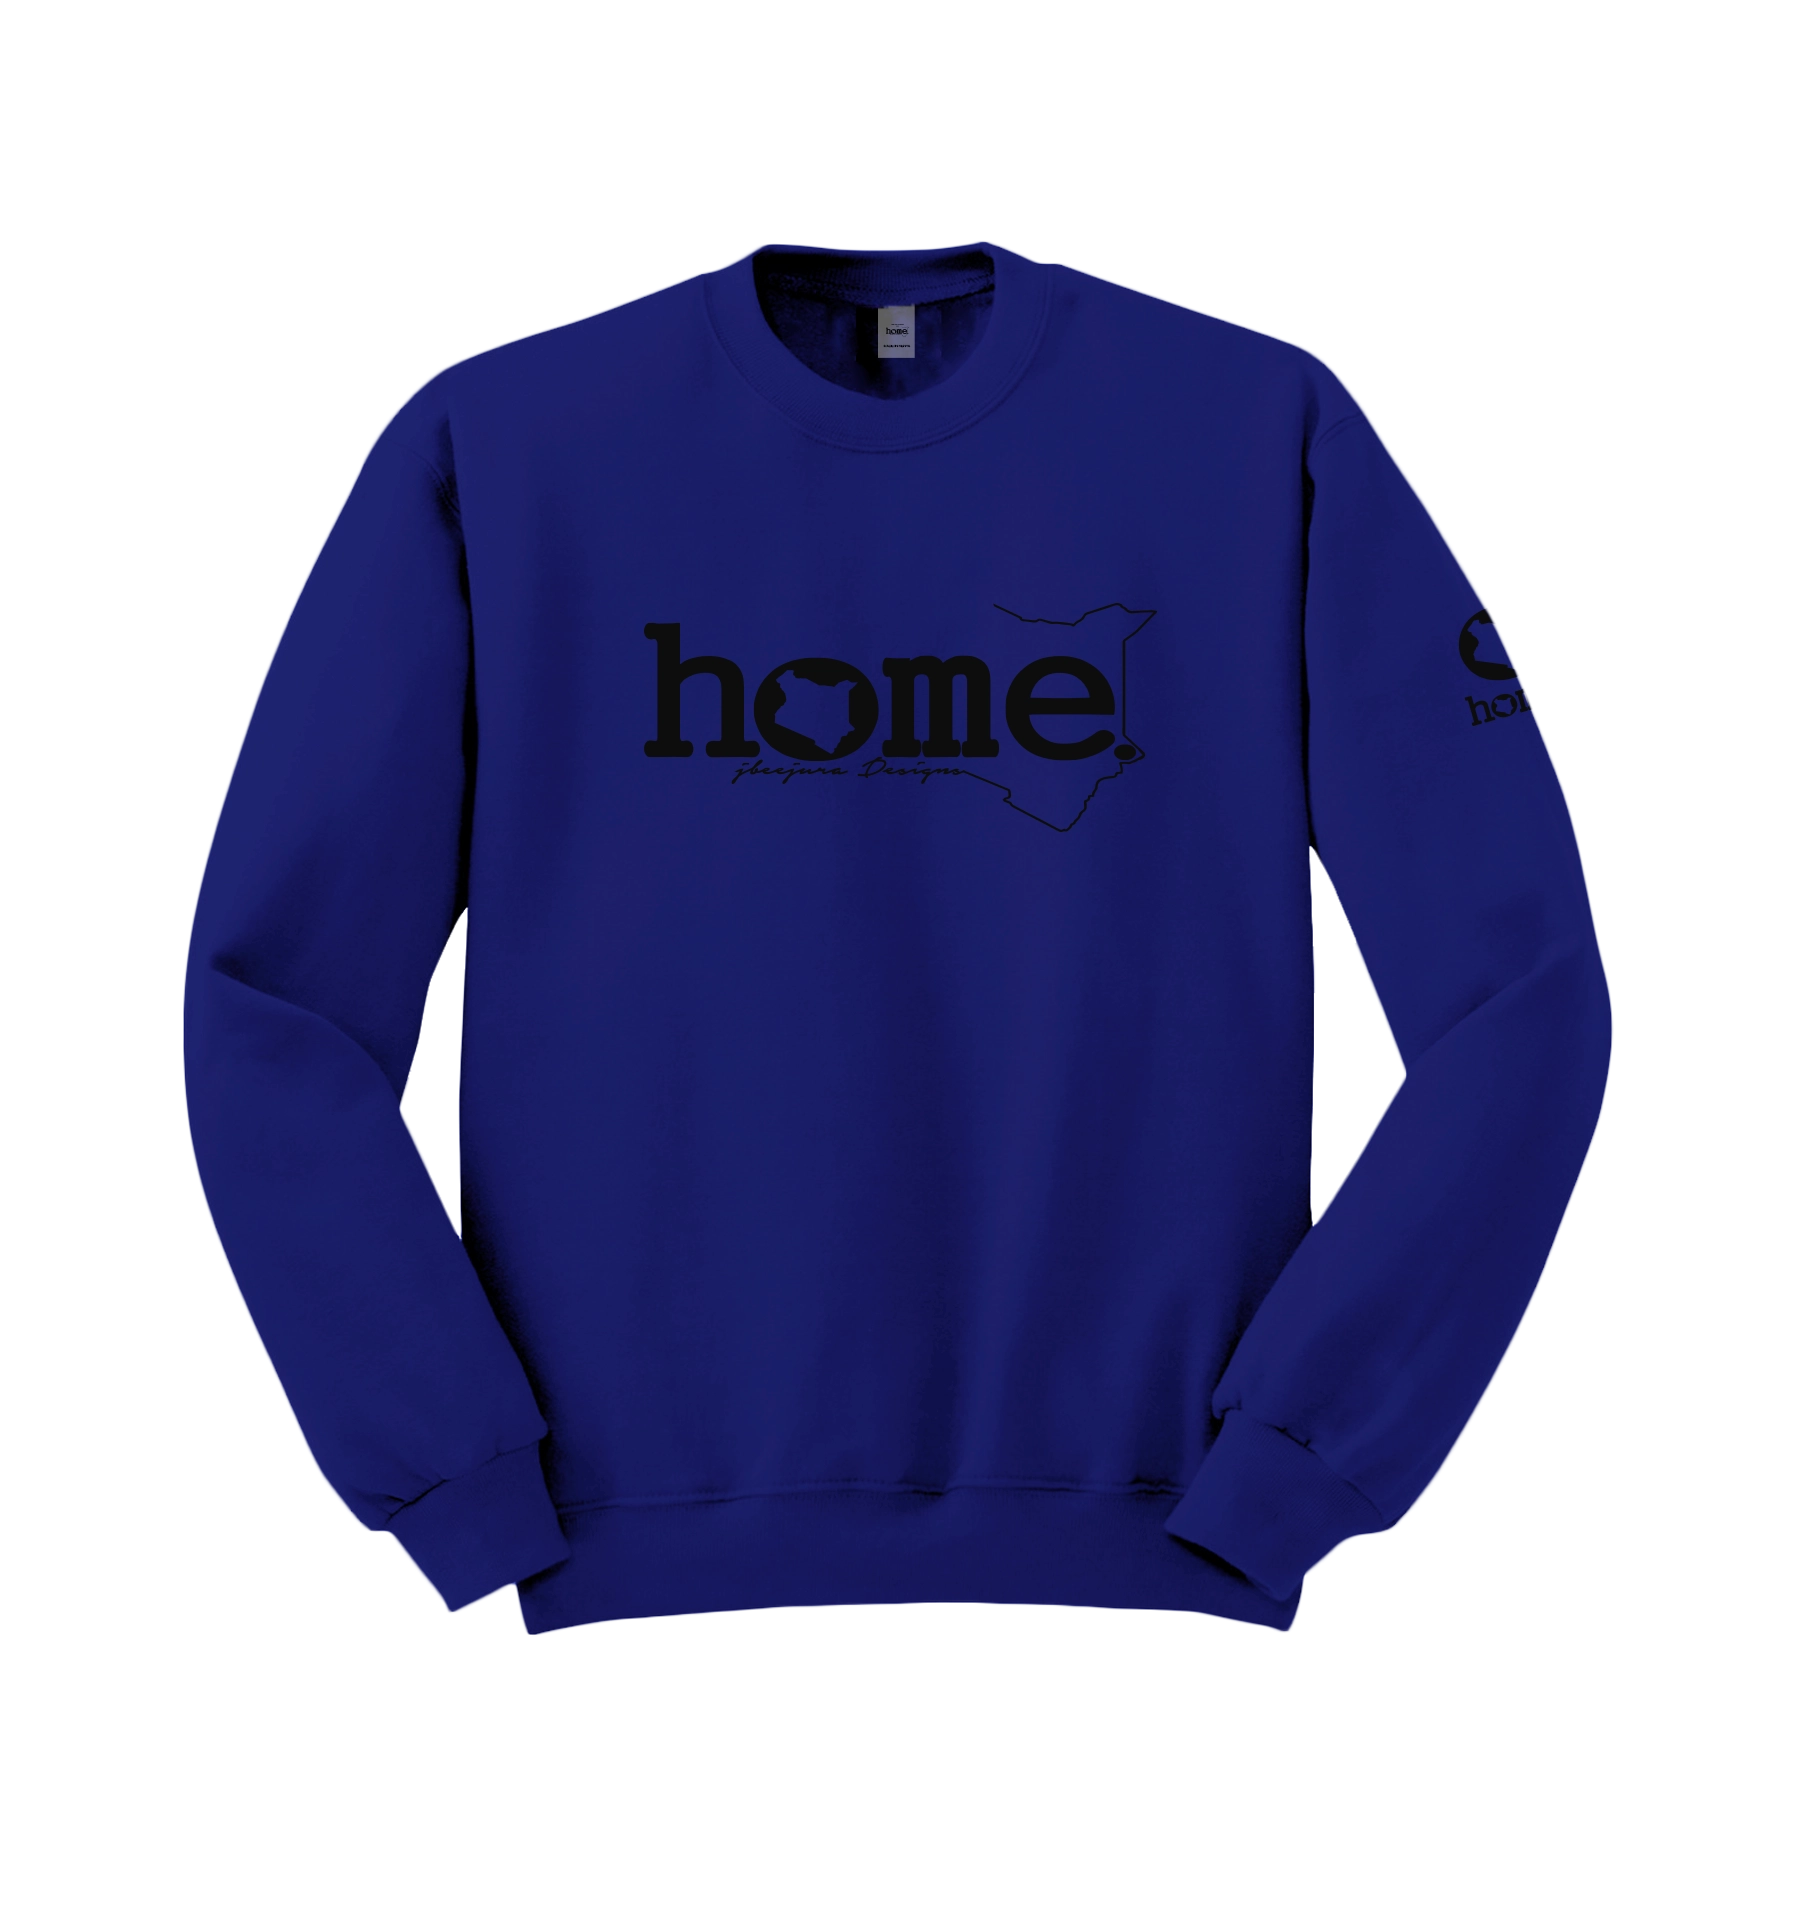 home_254 ROYAL BLUE SWEATSHIRT (HEAVY FABRIC) WITH A BLACK WORDS PRINT